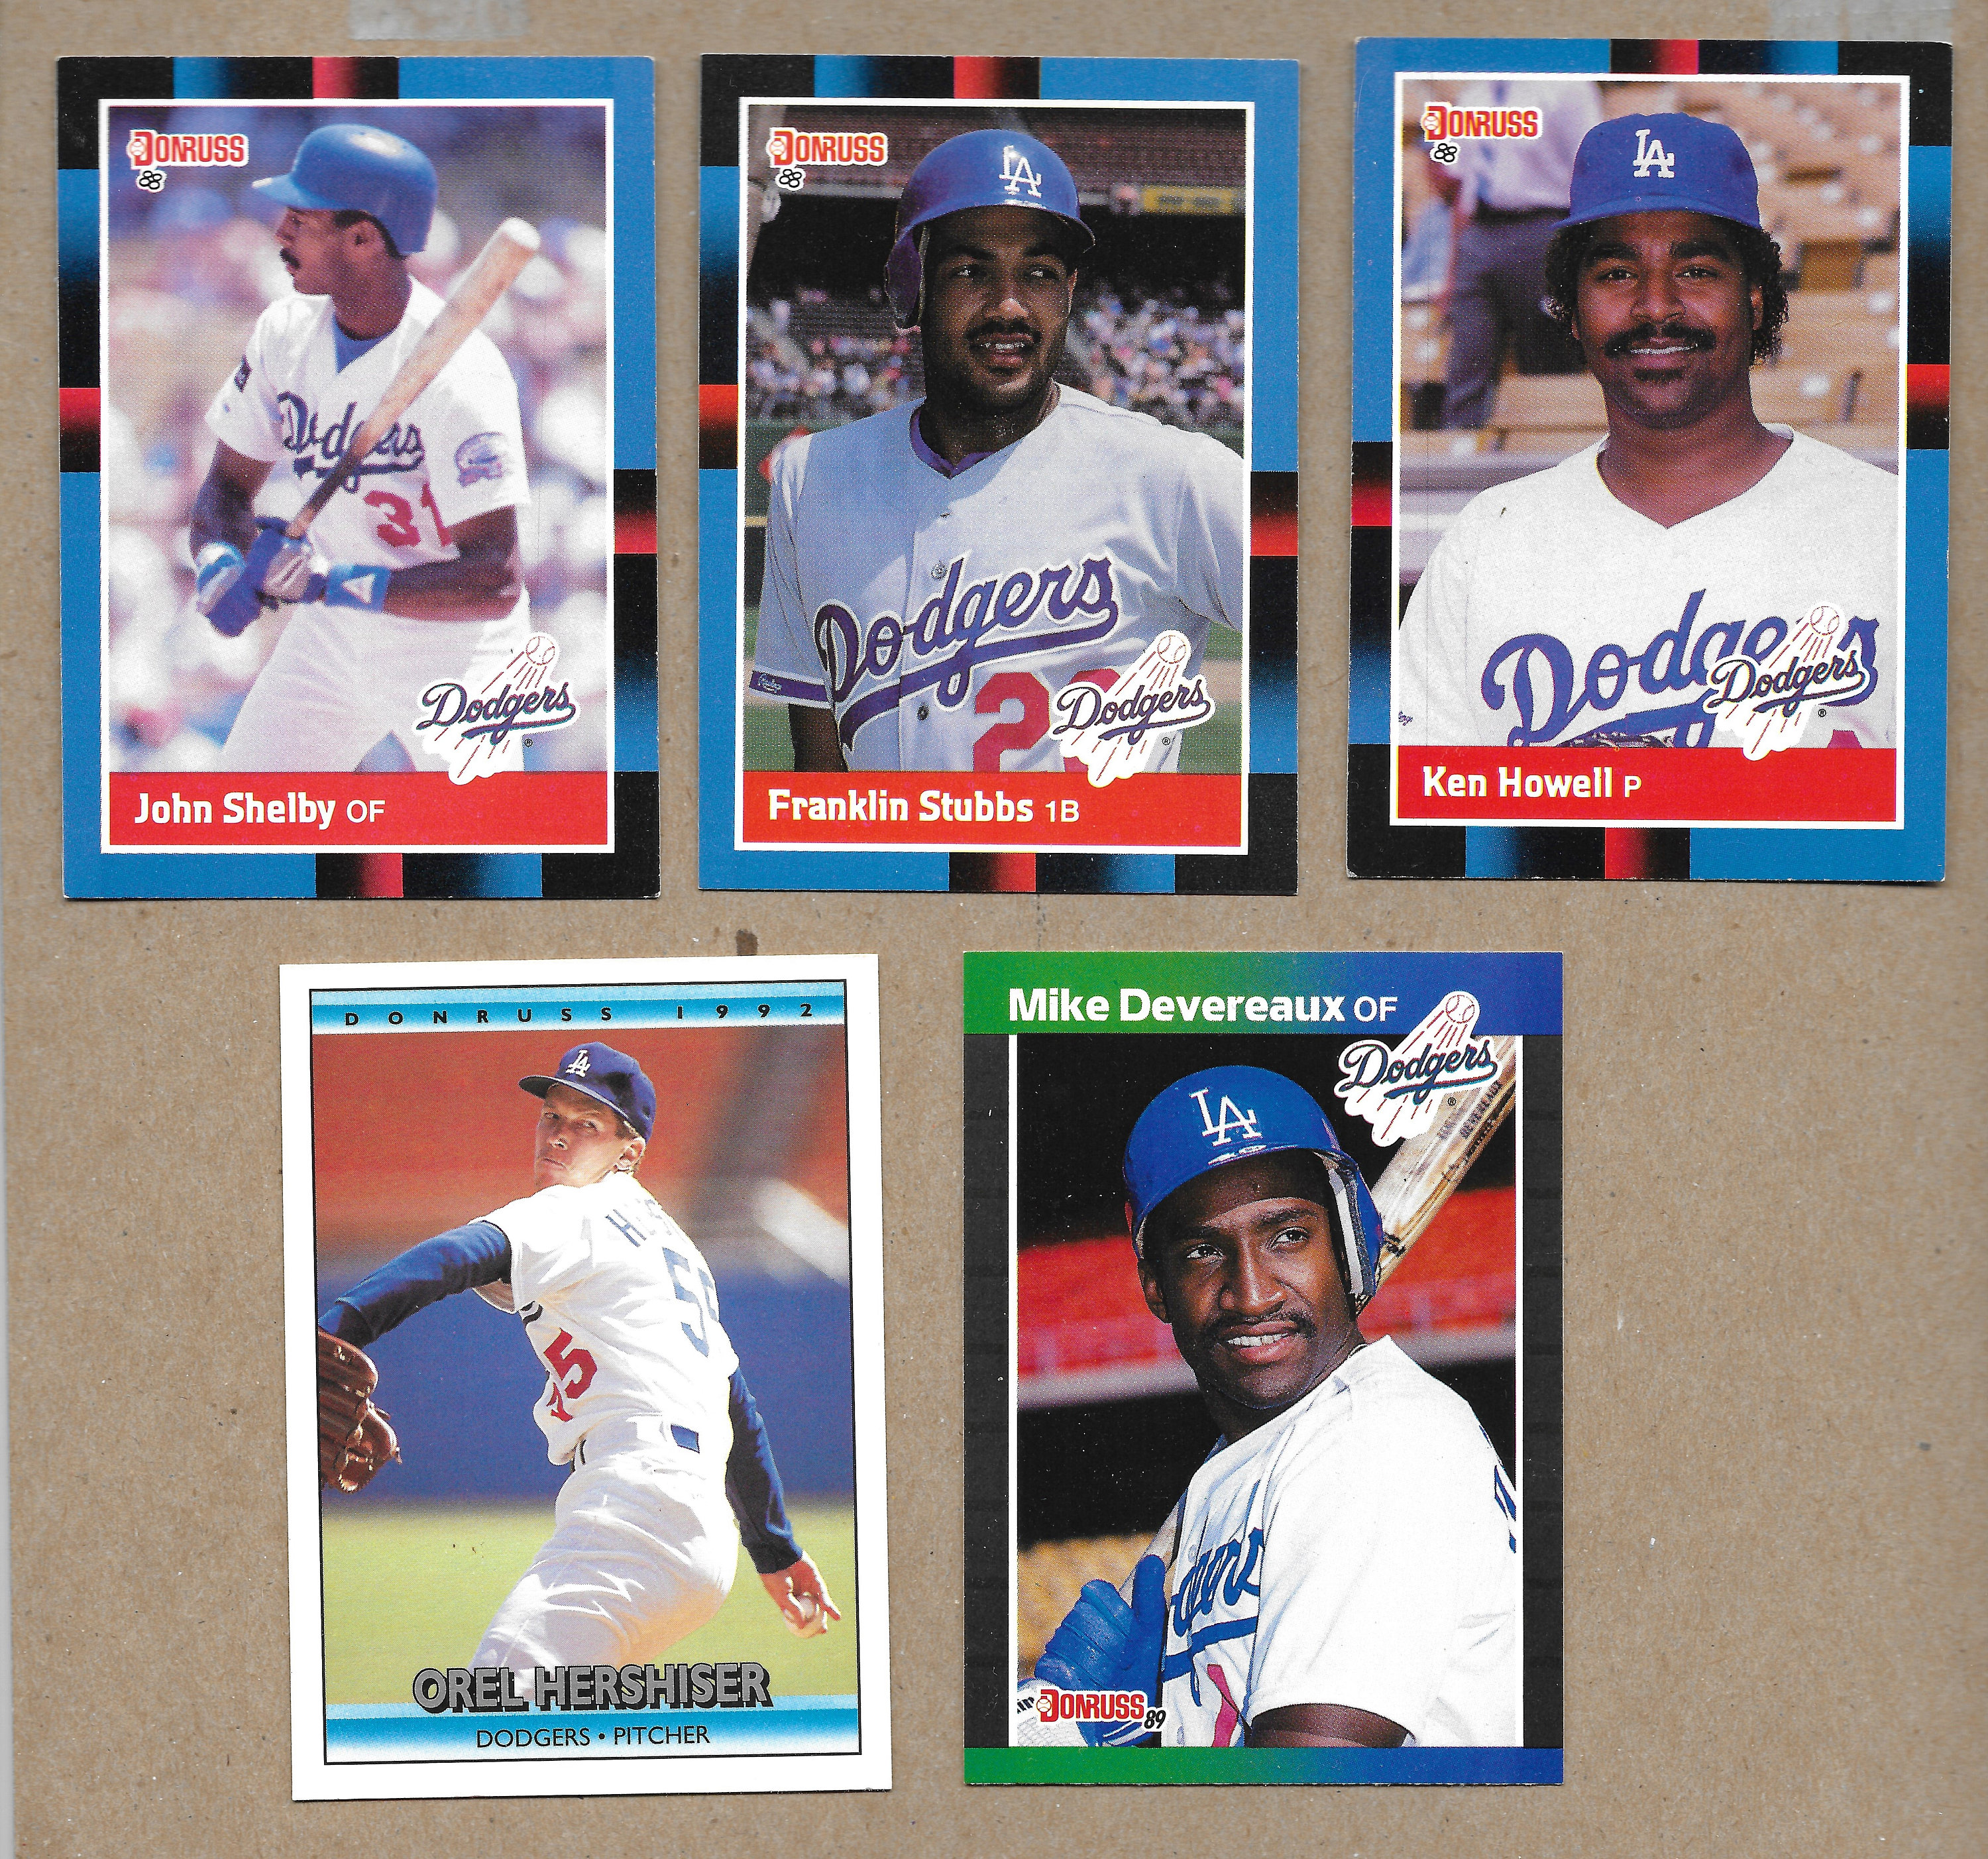 Brett Butler Jersey - Los Angeles Dodgers 1992 Away MLB Throwback Jersey